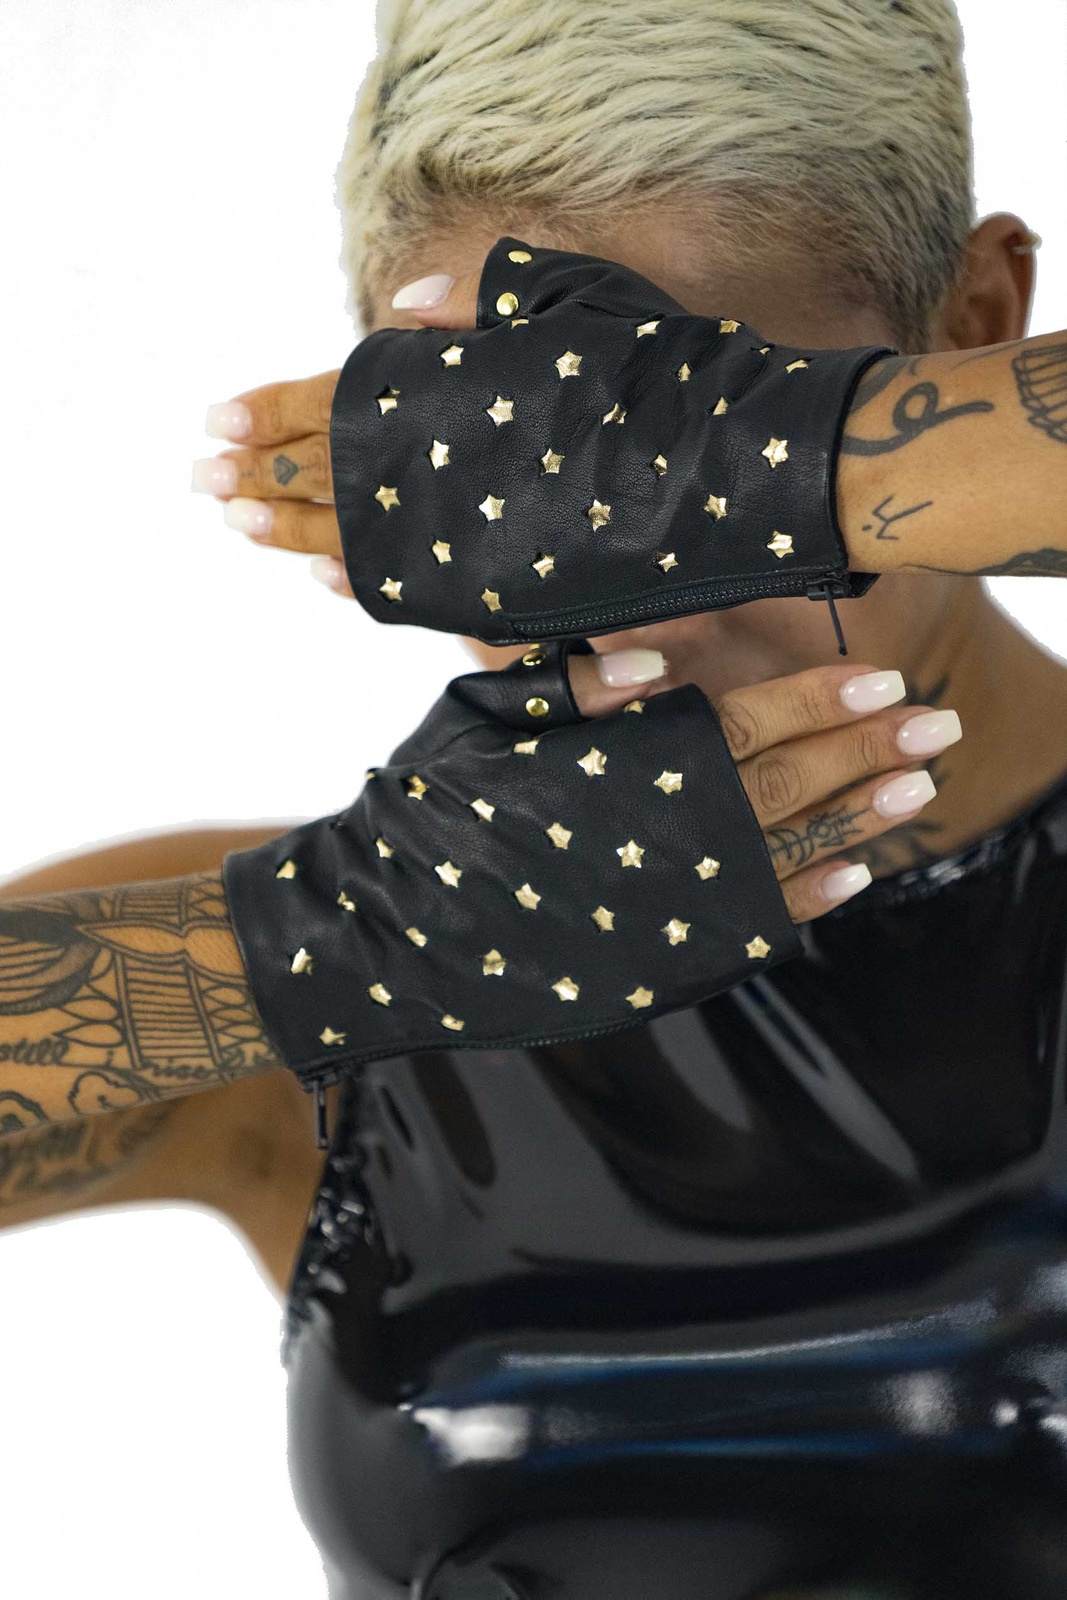 Estrela Black and Gold Fingerless Leather Half Gloves With Stars from Love Khaos Festival Clothing Brand.